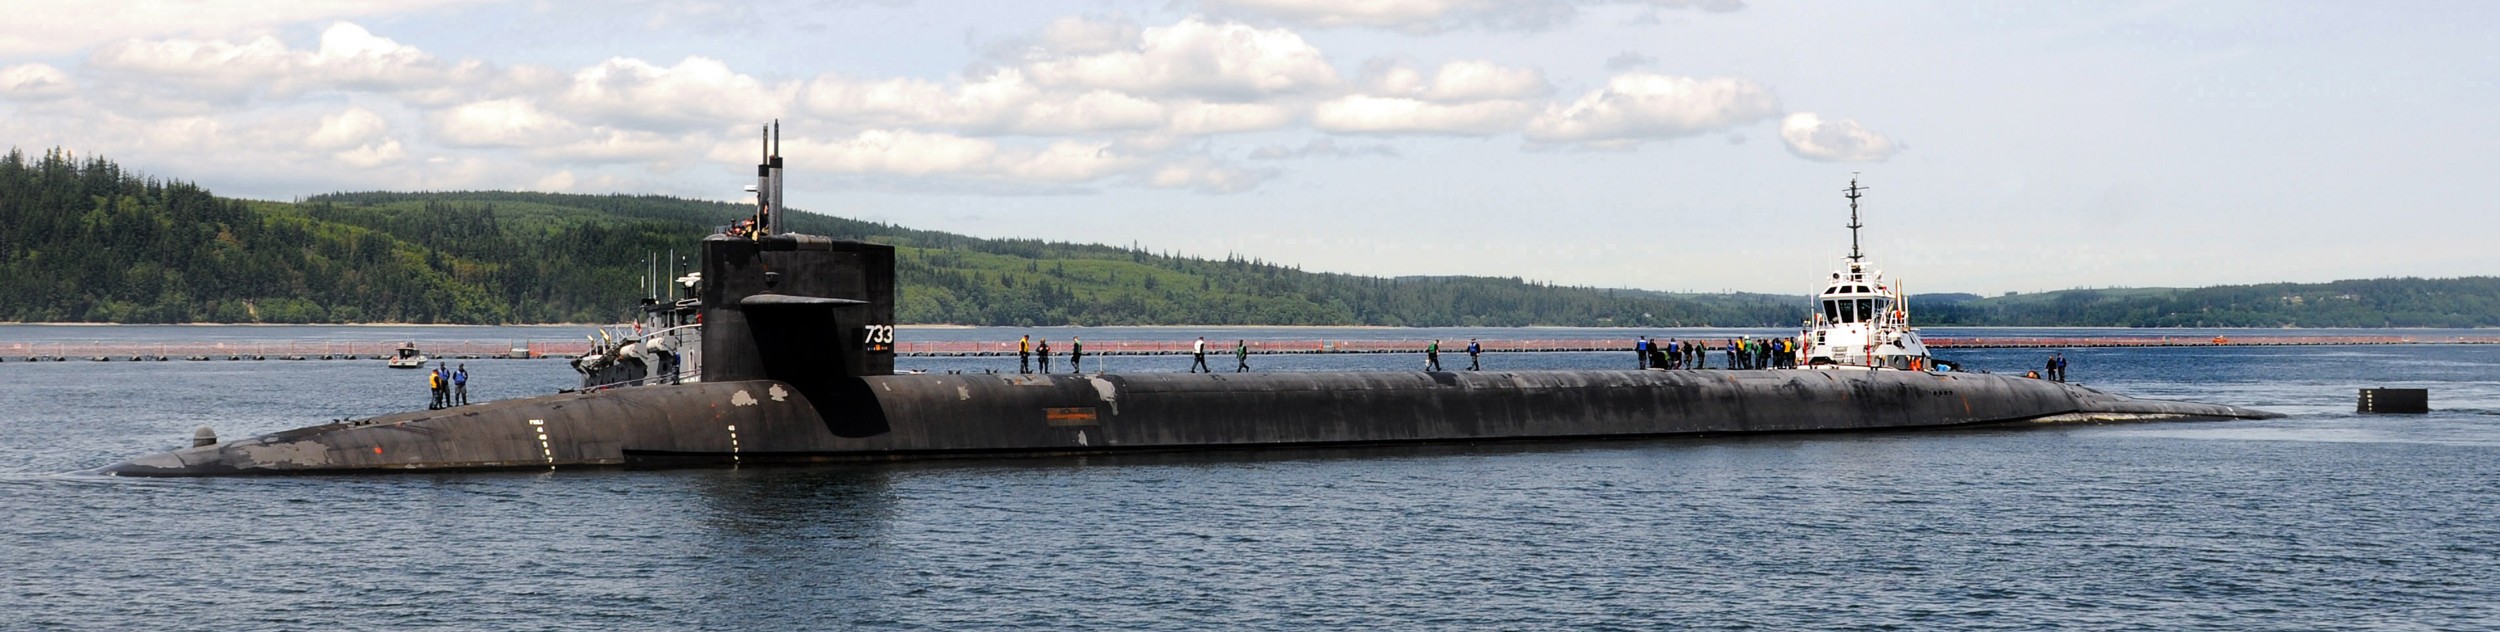 ssbn-733 uss nevada ohio class ballistic missile submarine 2013 08 naval base kitsap bangor washington